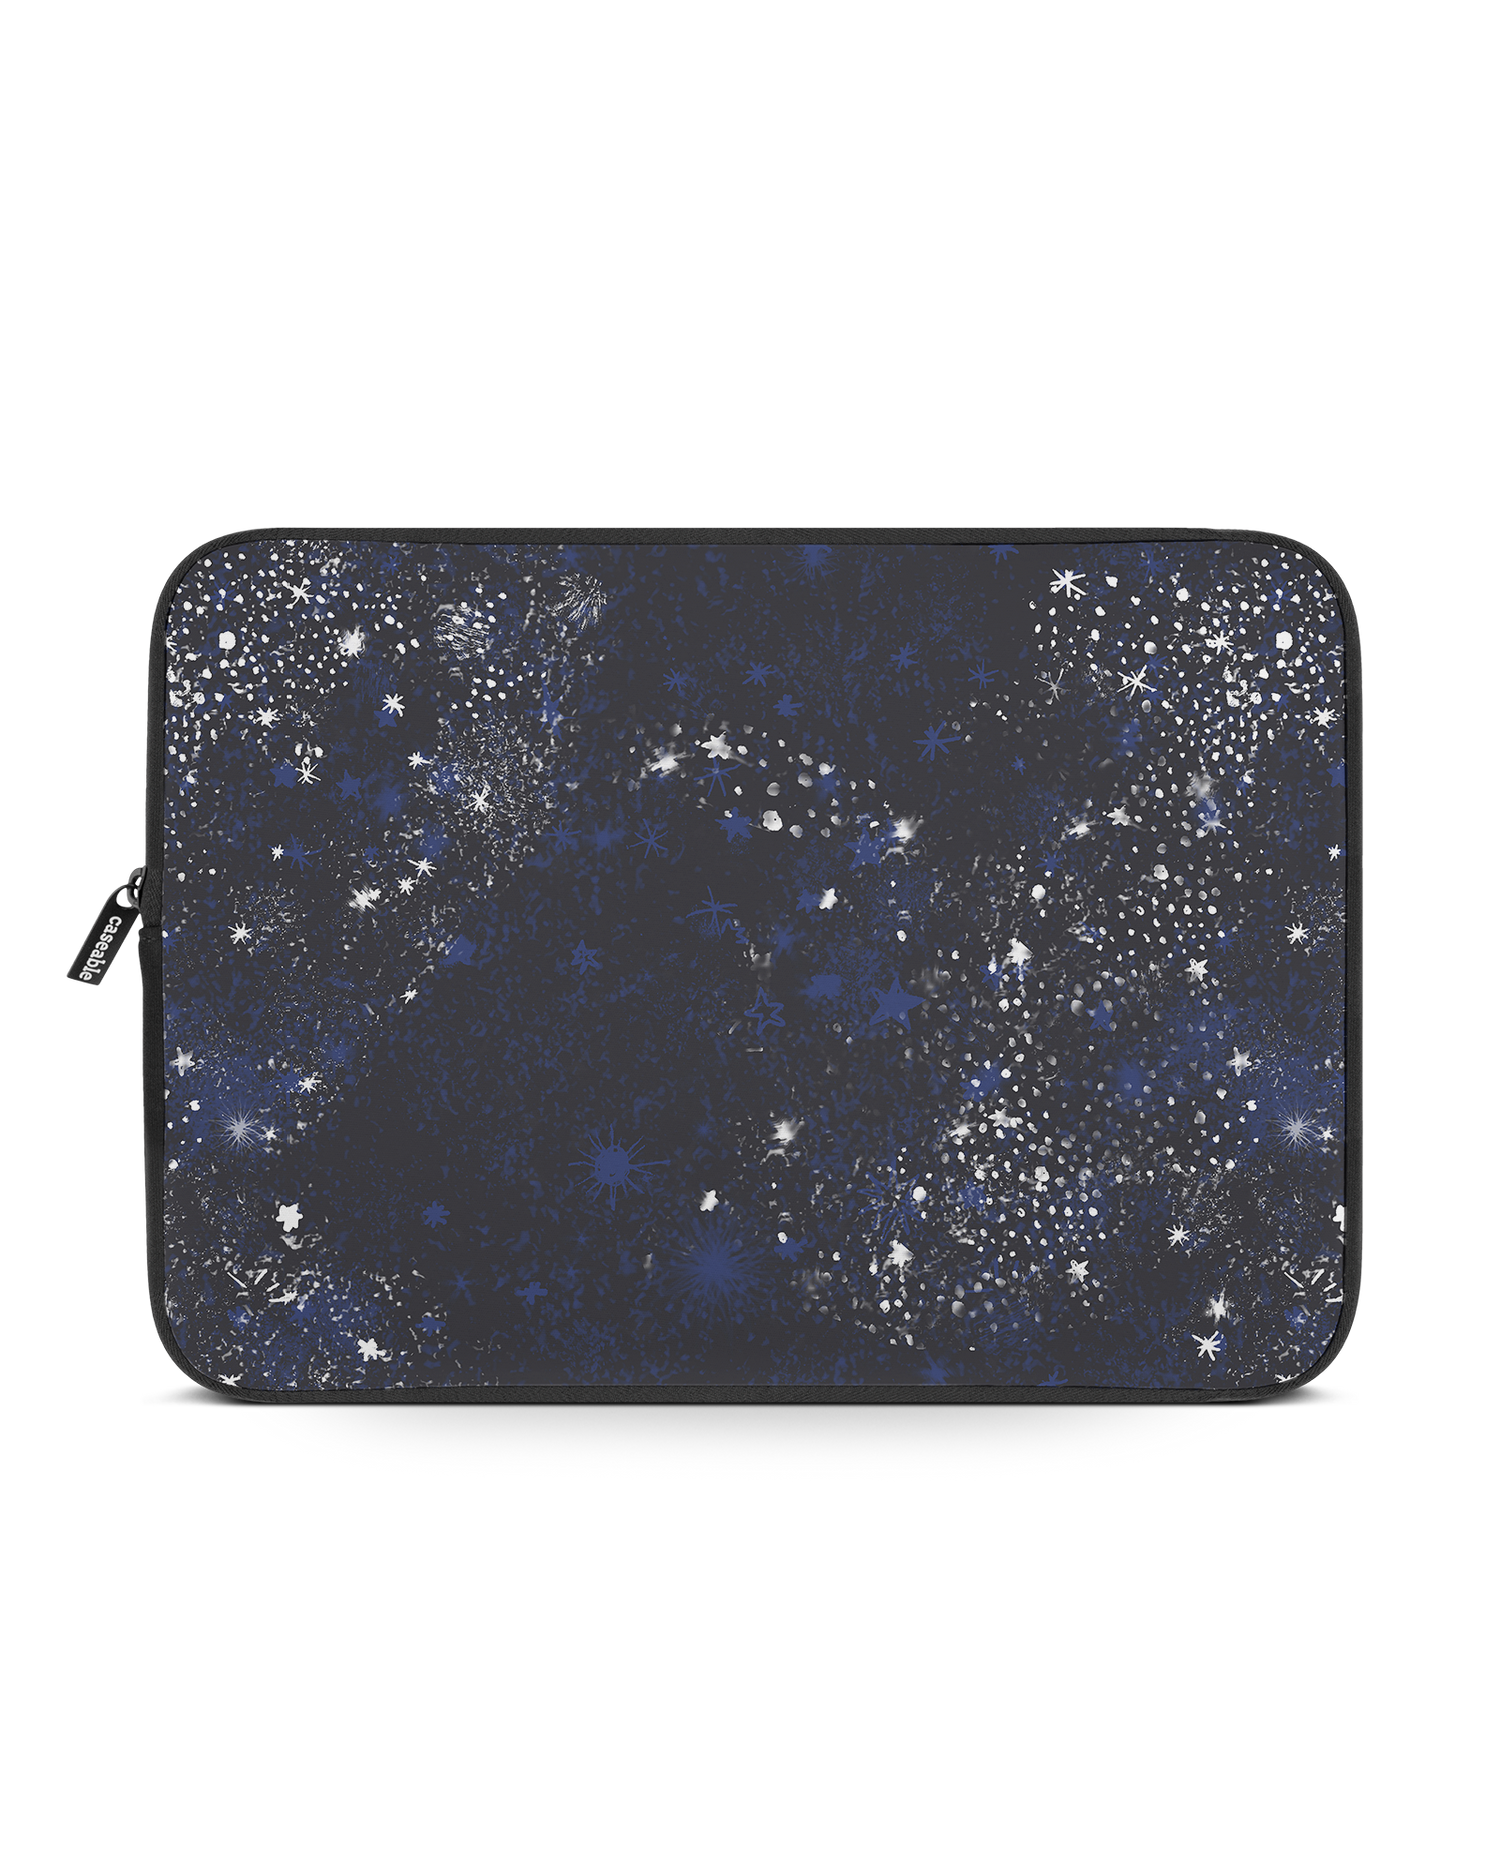 Starry Night Sky Laptophülle 14-15 Zoll: Vorderansicht